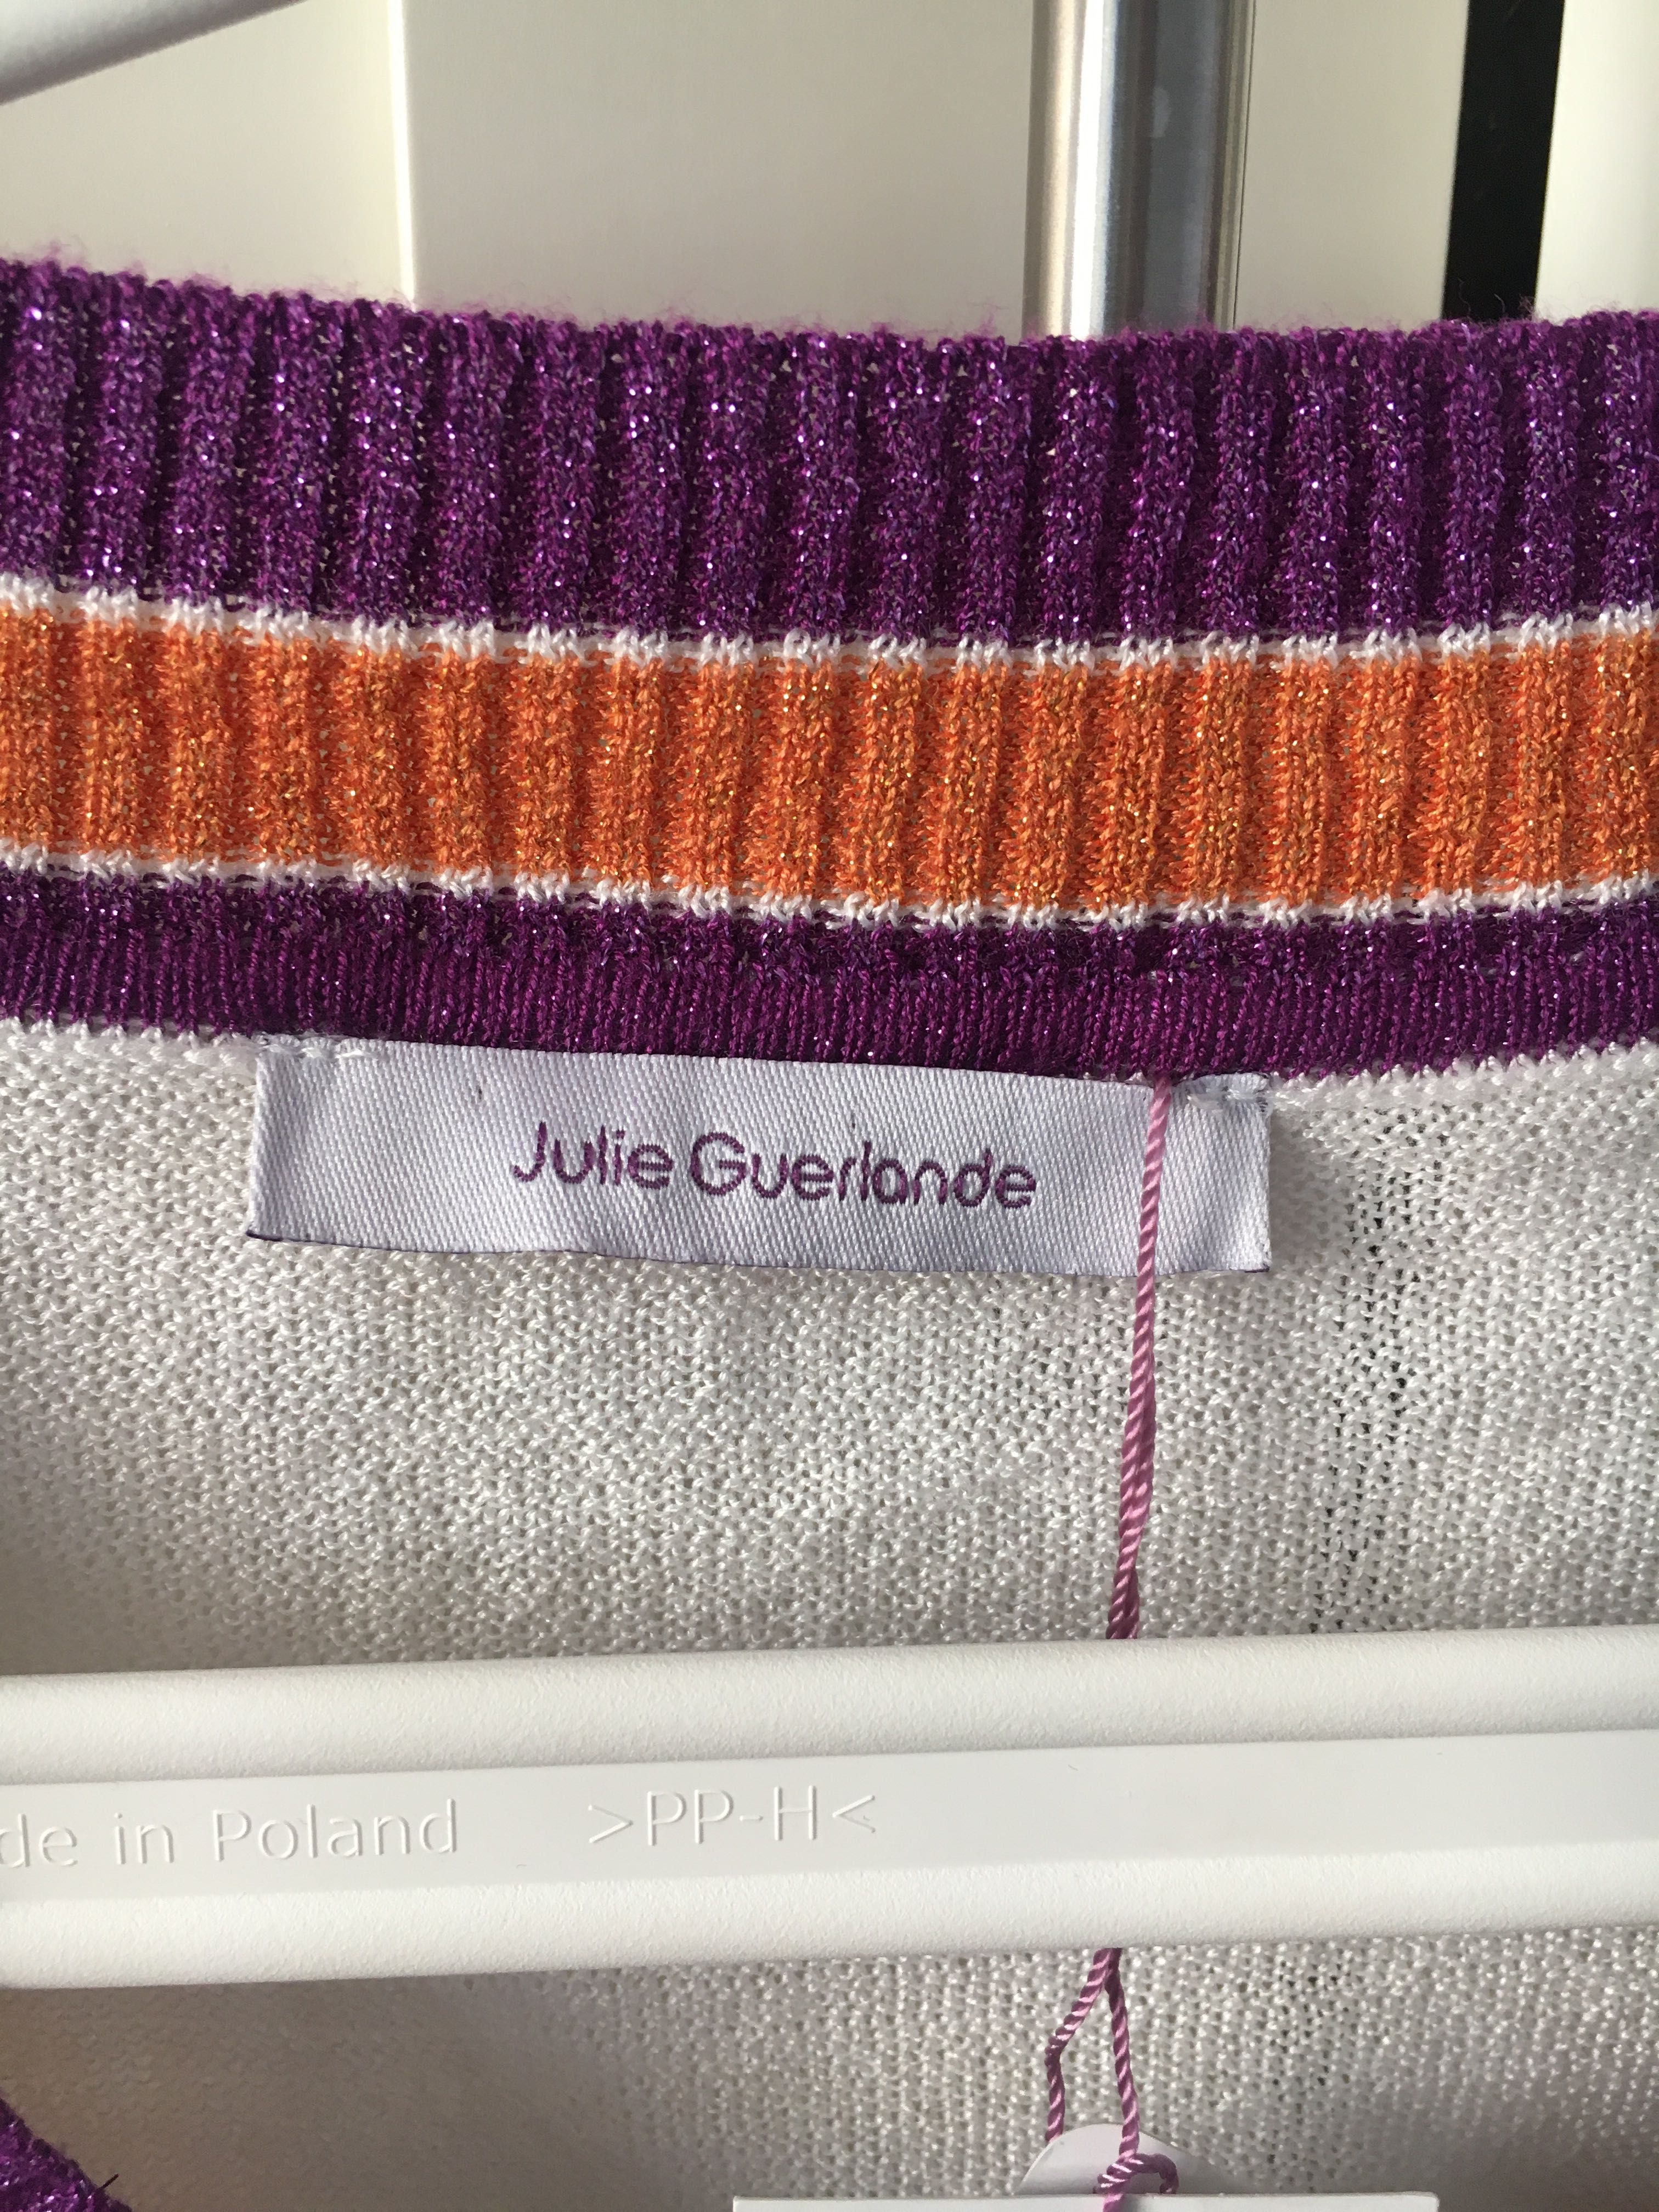 Nowy wiosenny letni sweterek Julie Guerlande r. S/M